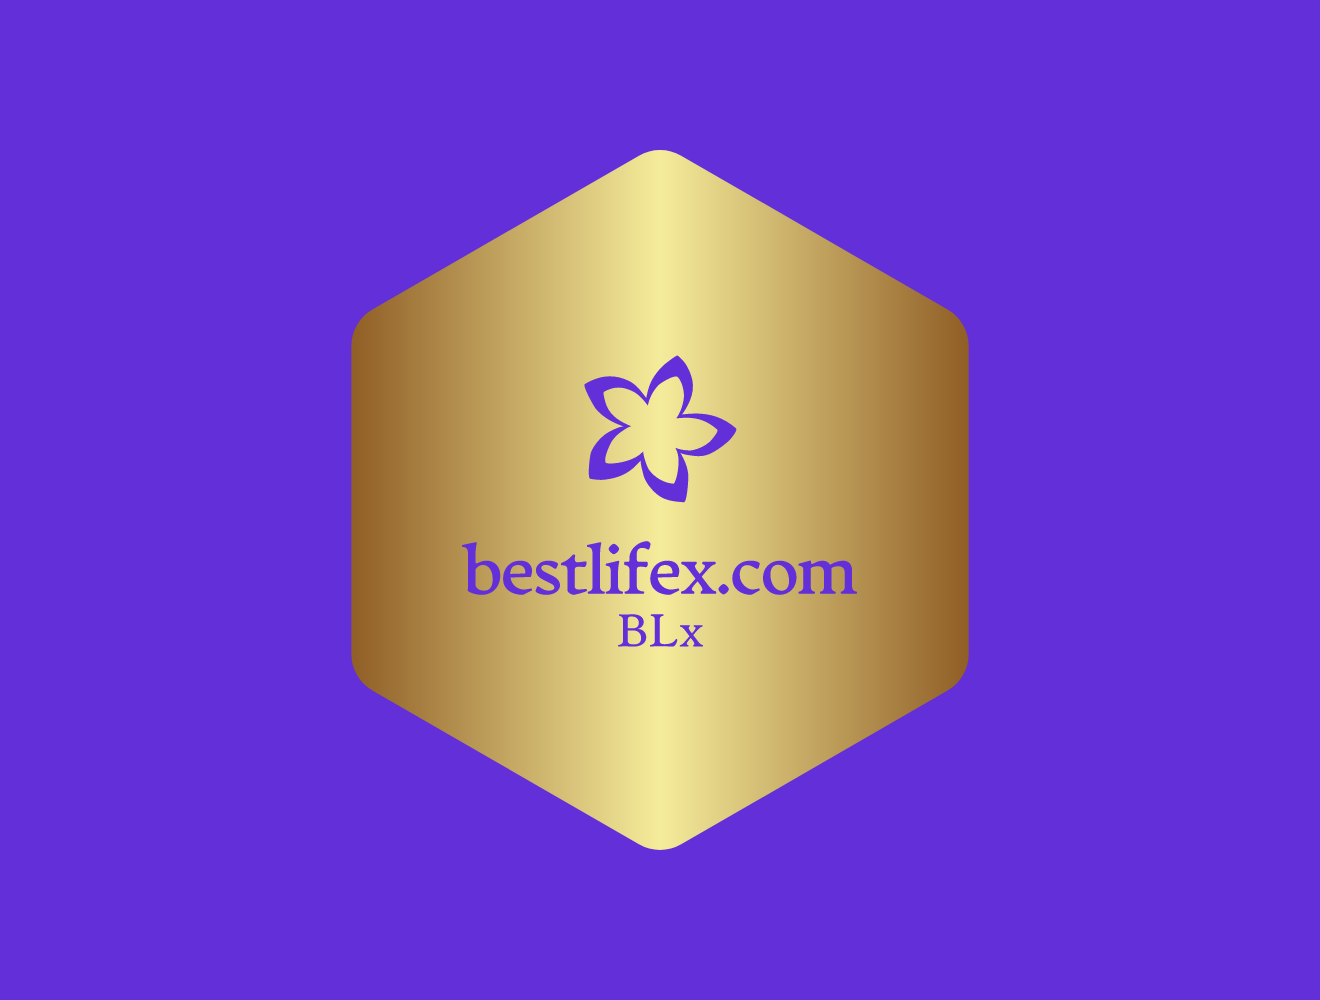 bestlifex.com